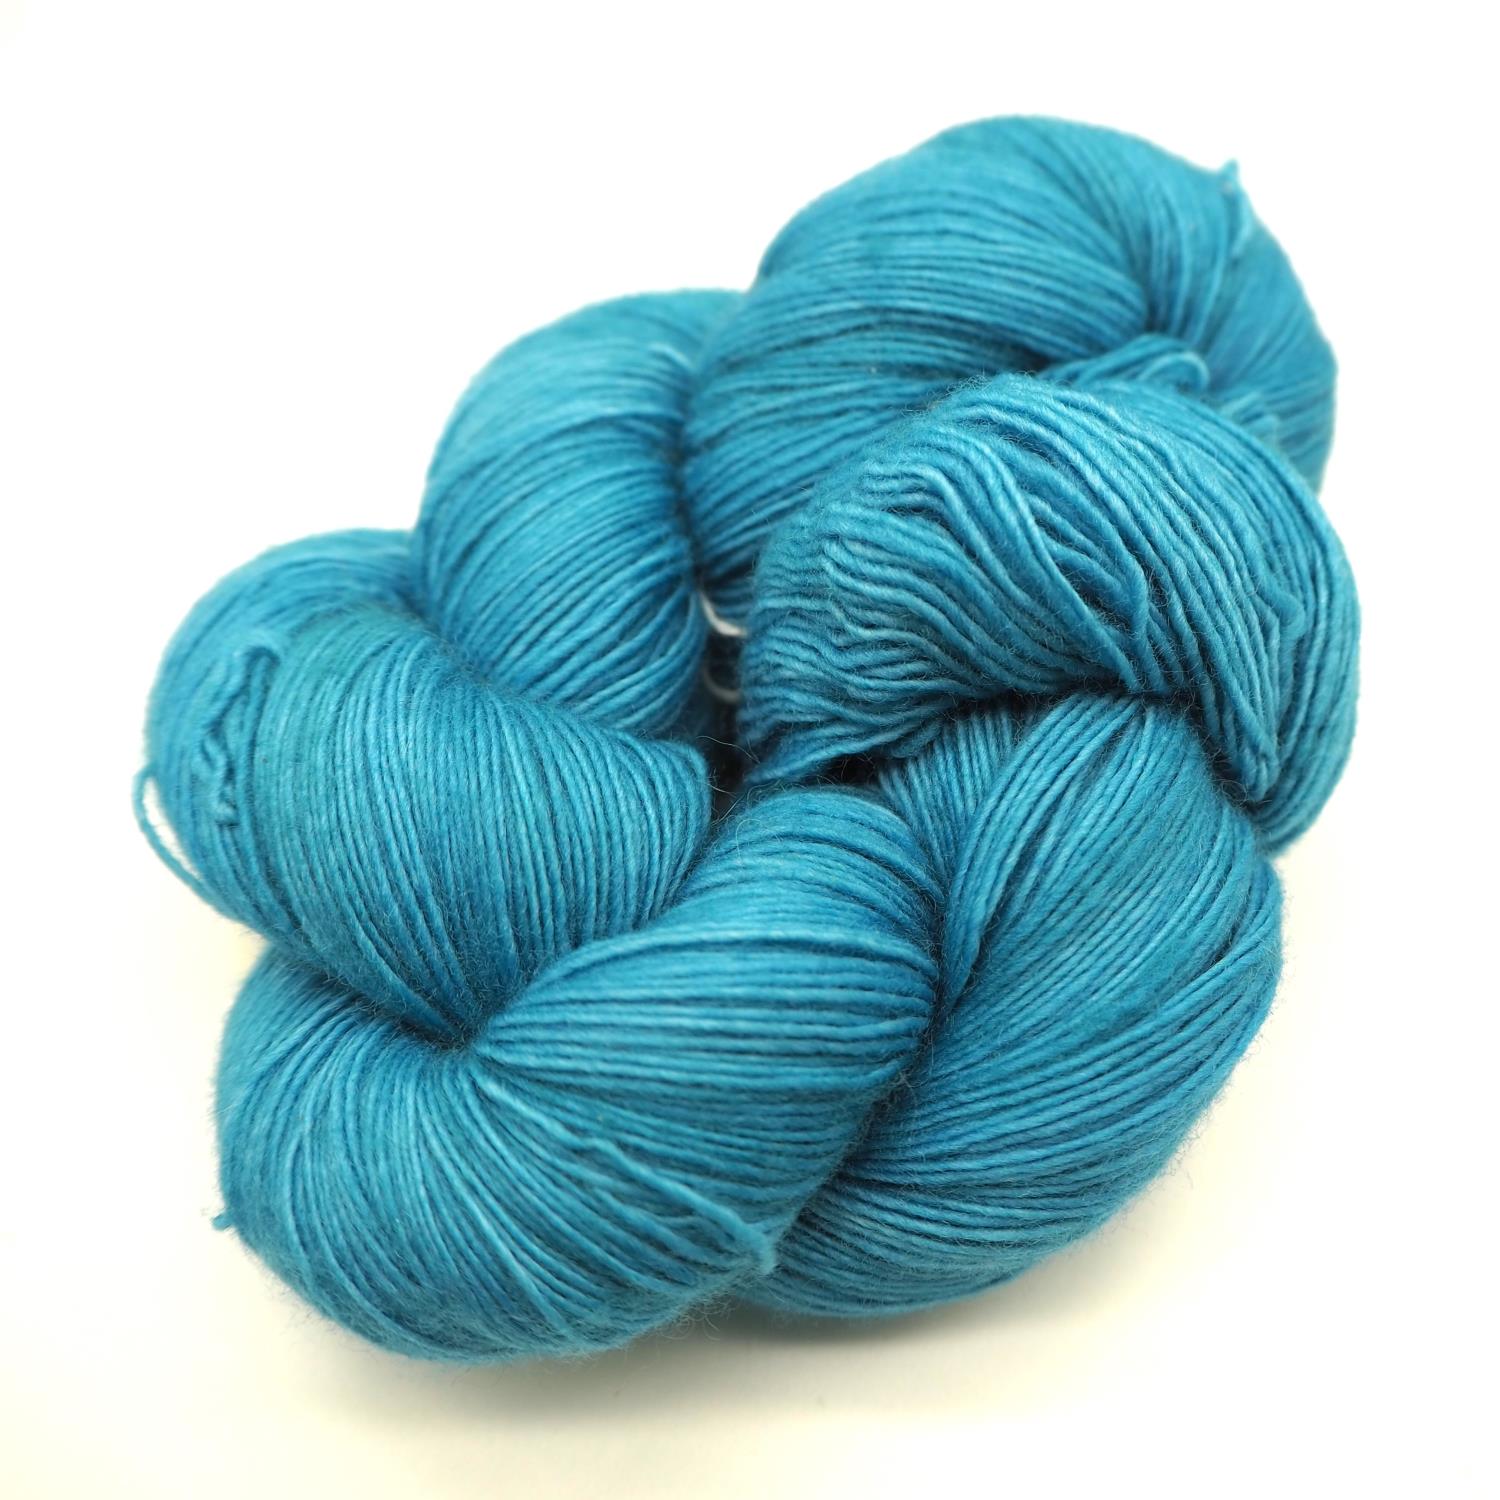 027 Lace - bobby blue